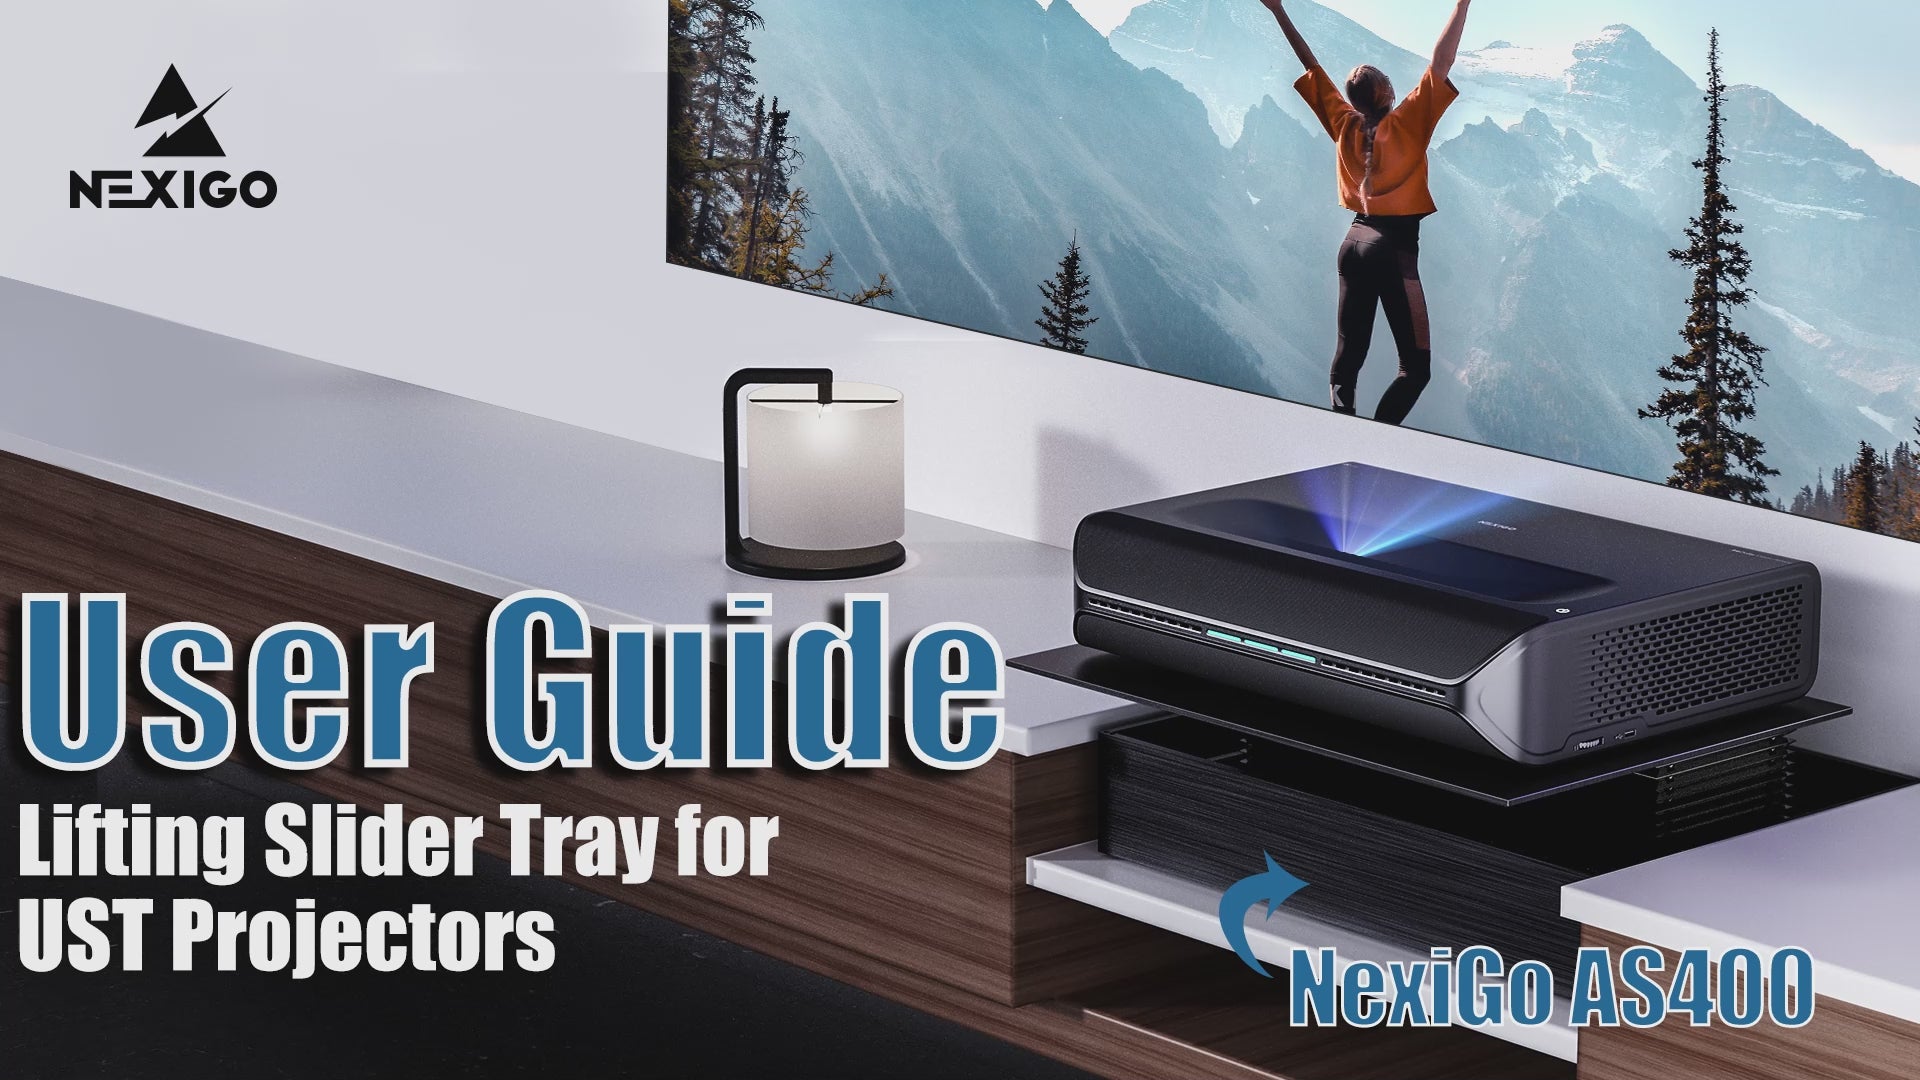 NexiGo Lifting Slider Tray For UST Projectors